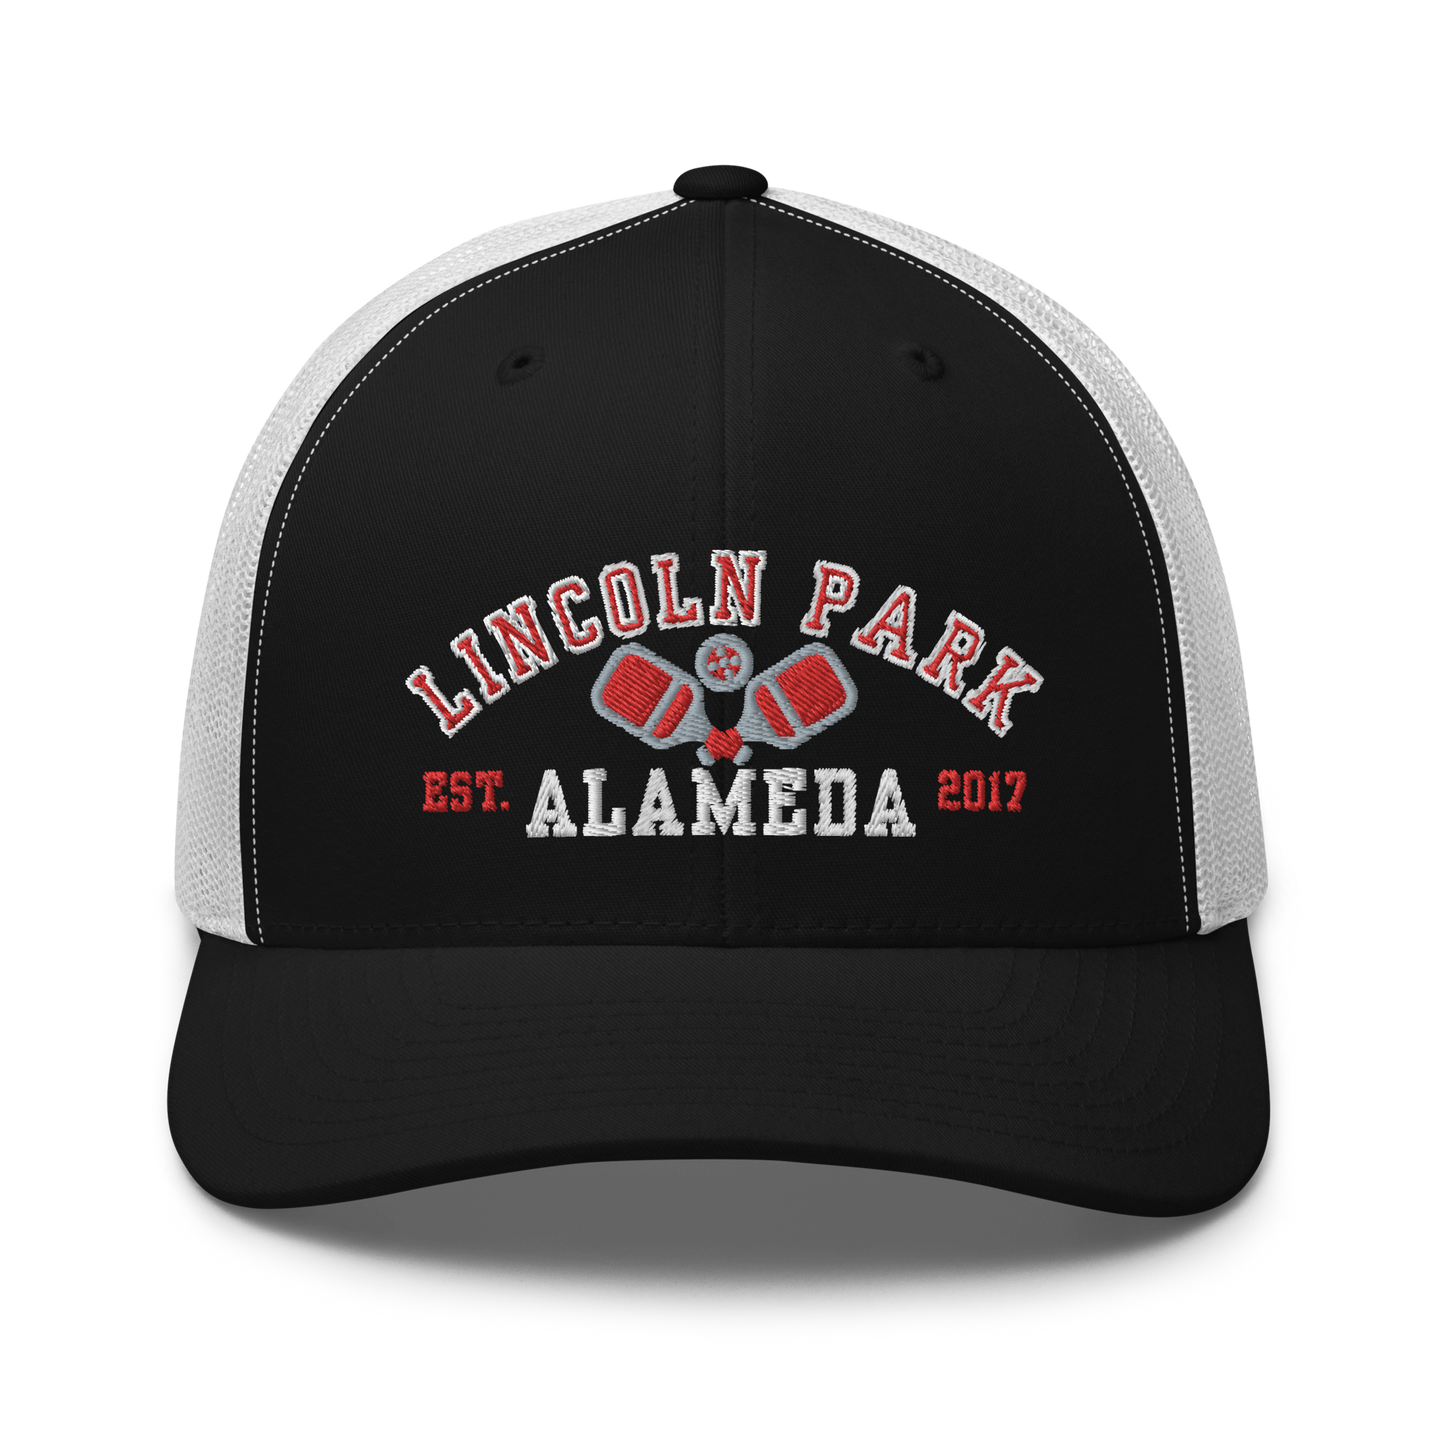 Alameda Pickleball CrossPaddles Solid - Retro Trucker Hat (Yupoong) MJ 239